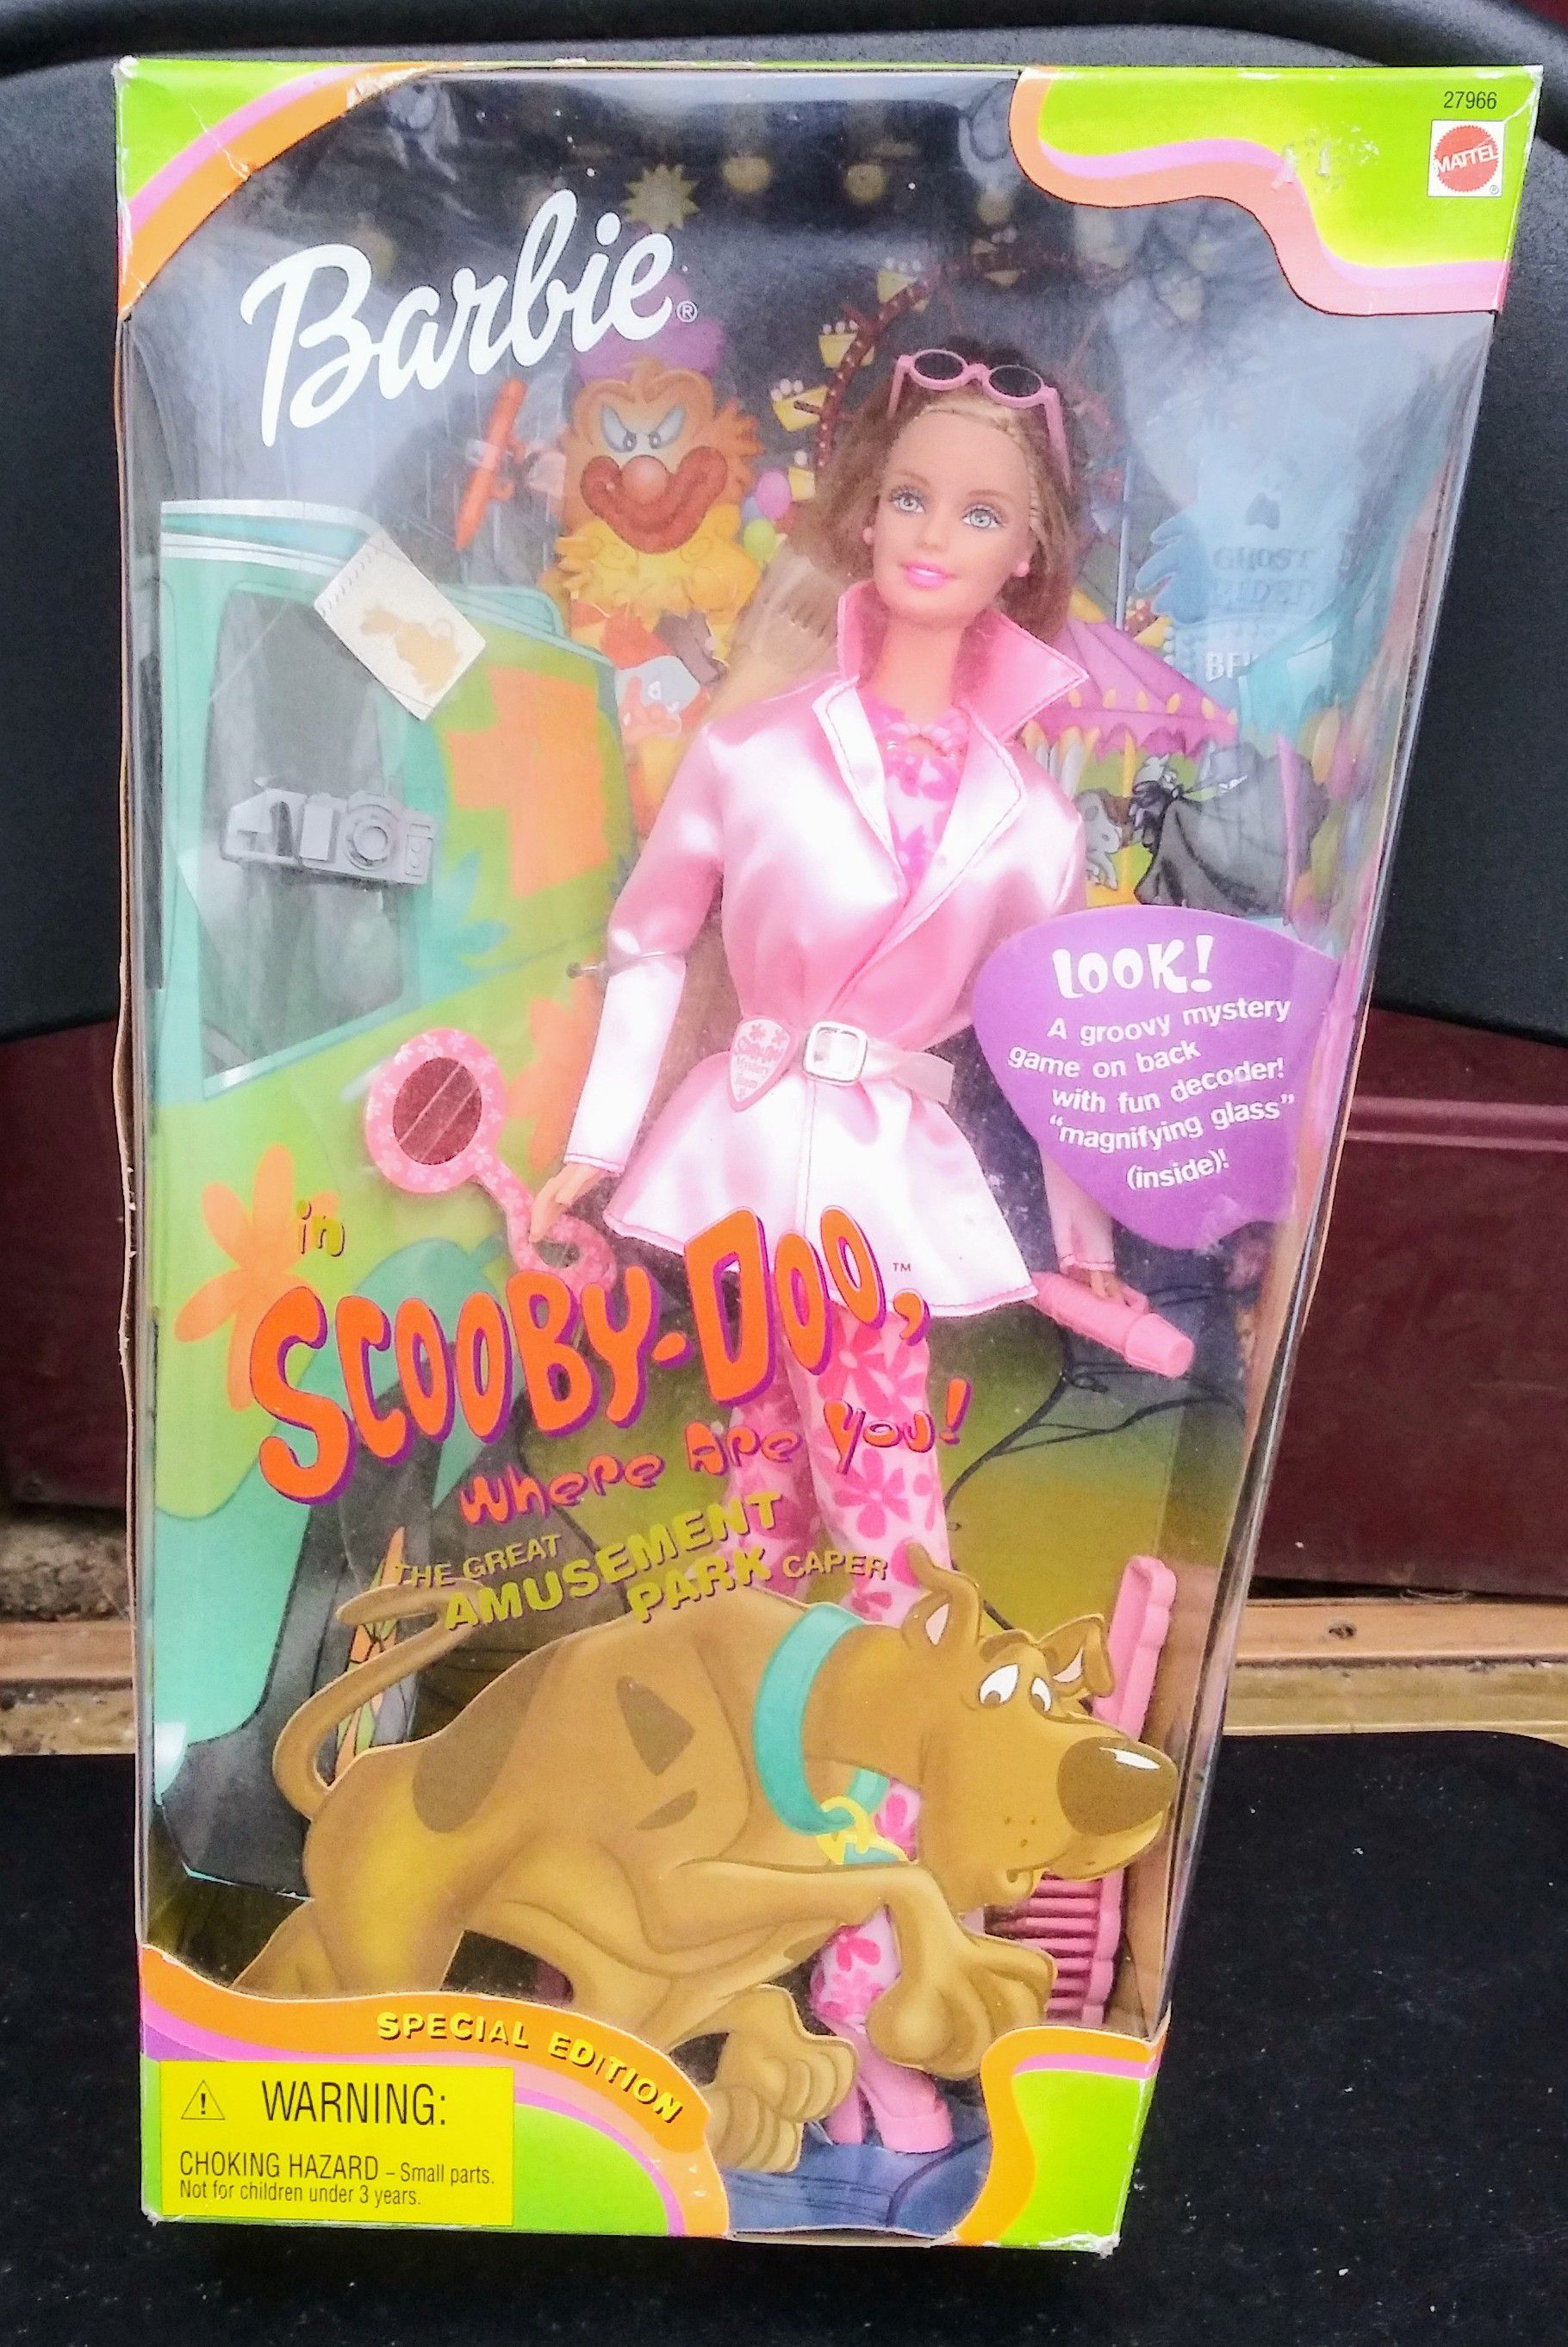 Special Edition Scooby Doo Barbie